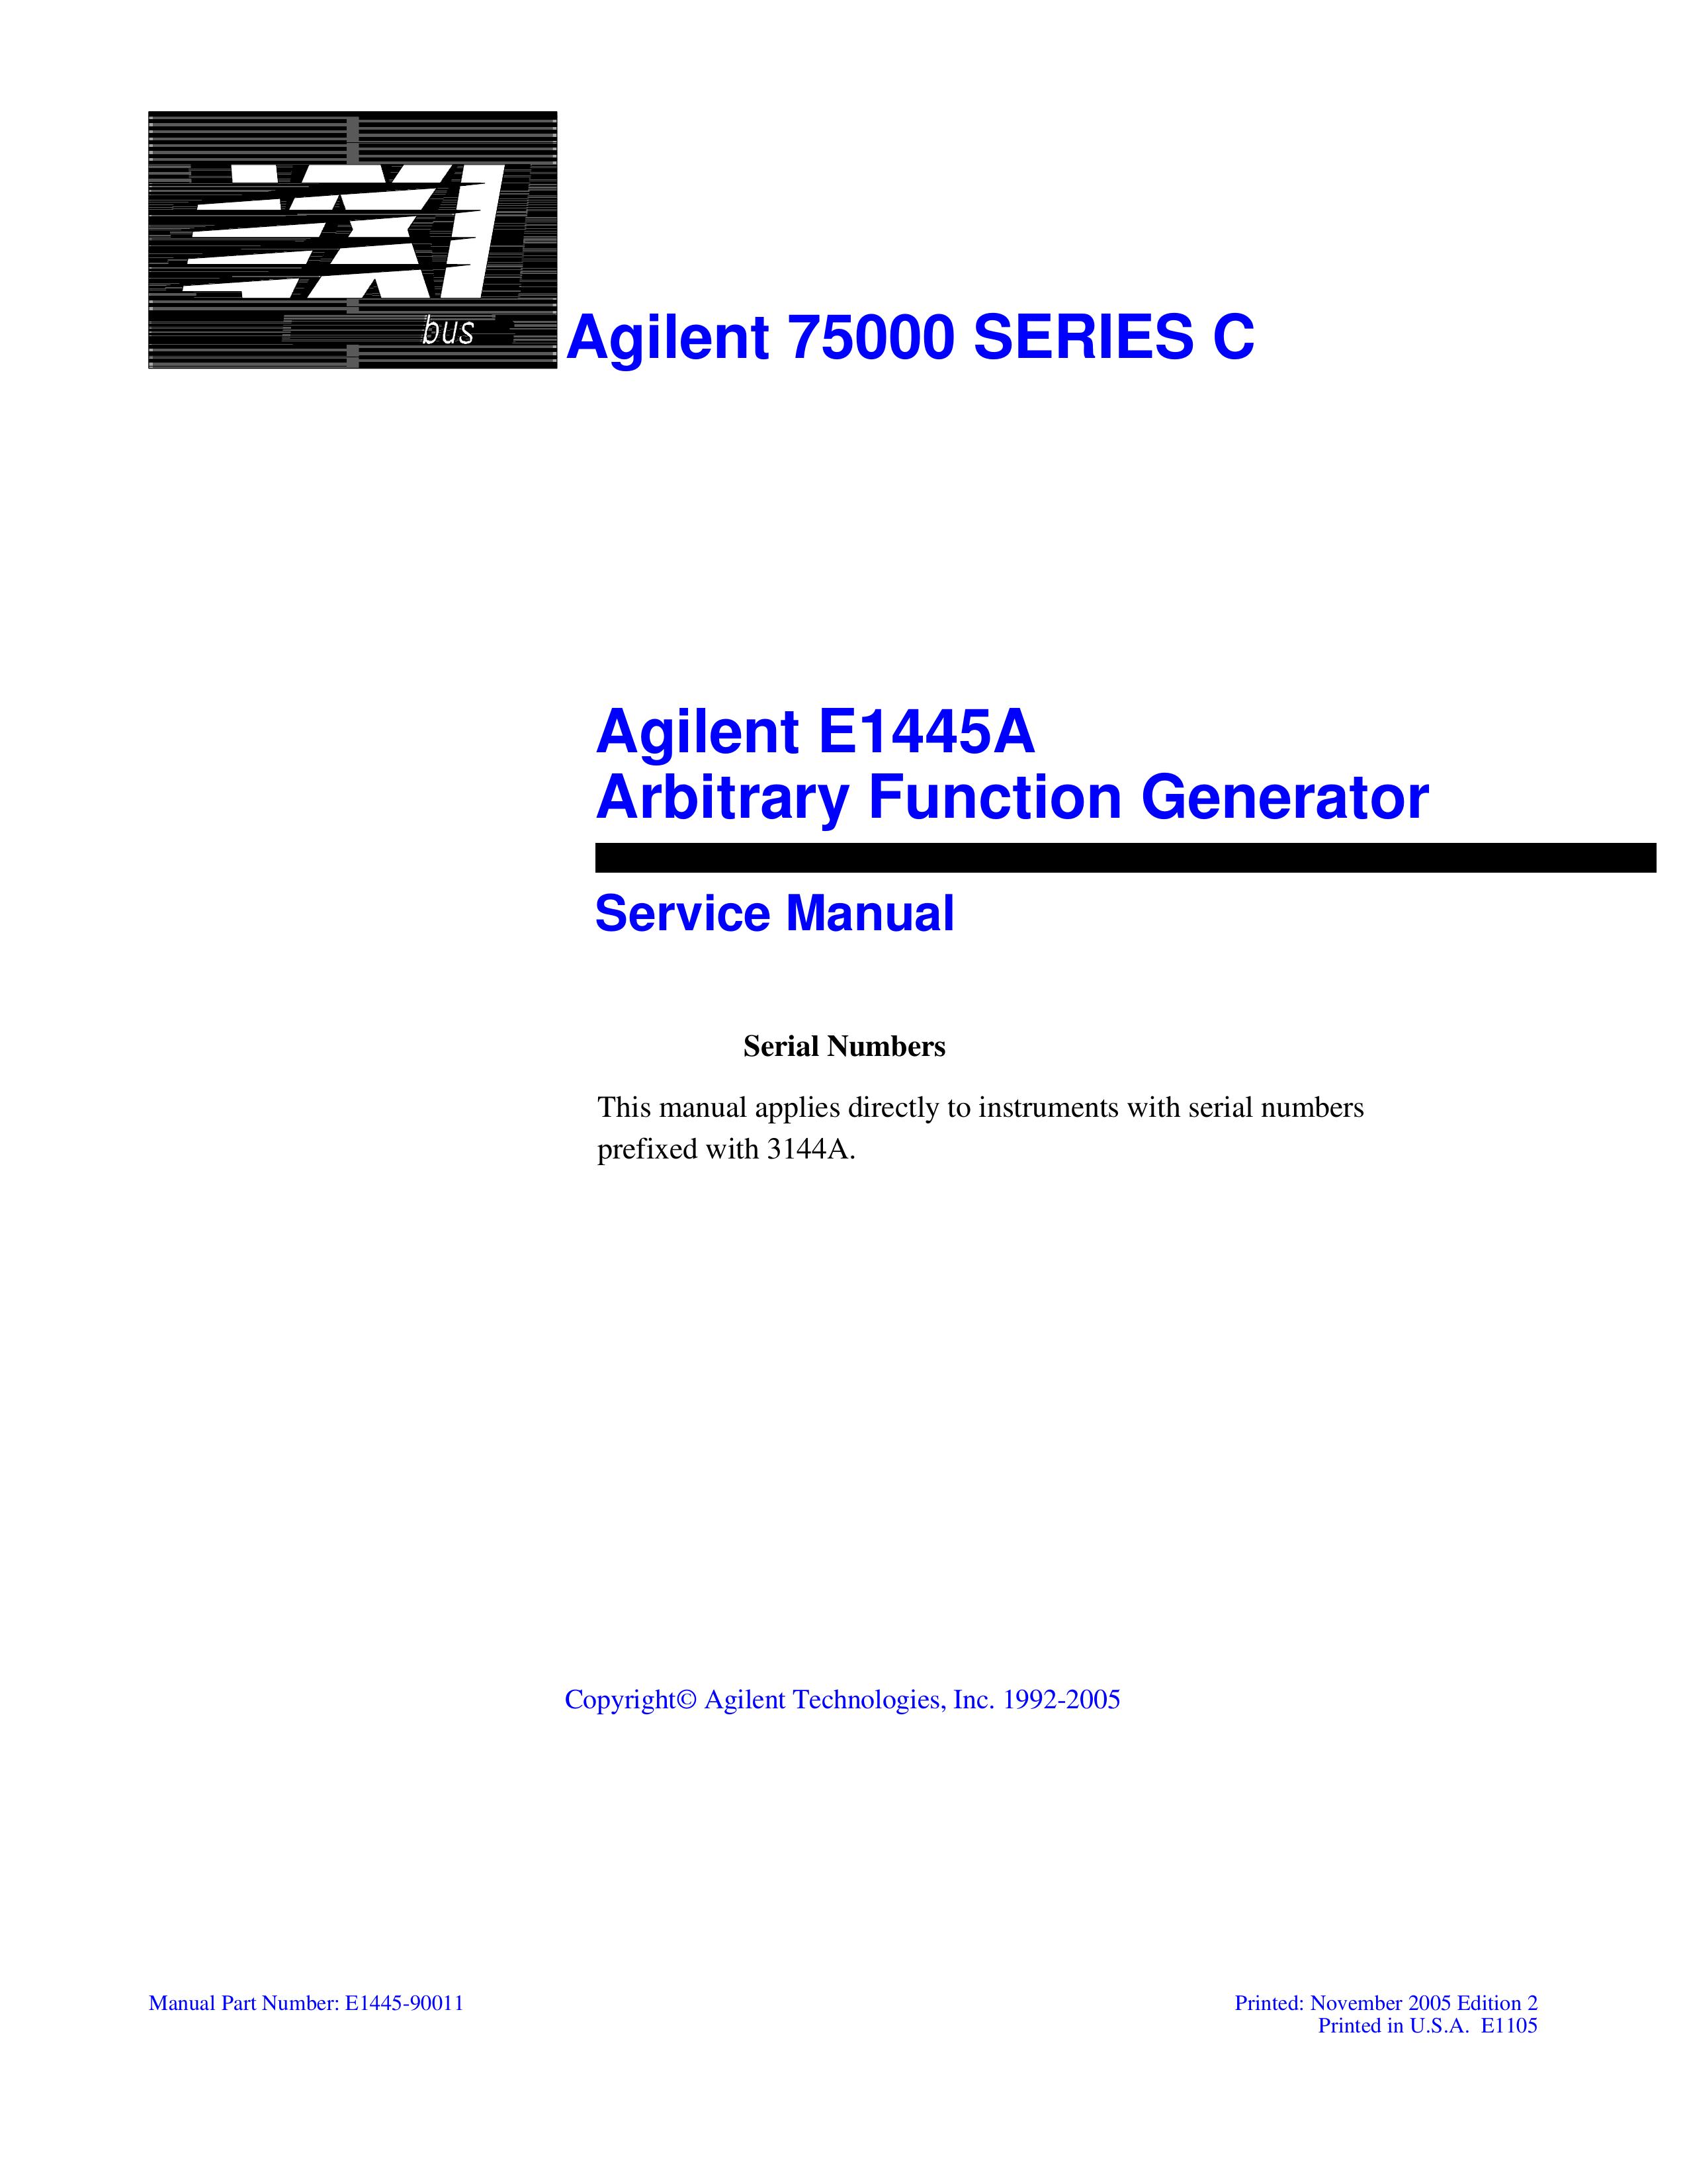 Agilent Technologies E1445A Portable Generator User Manual